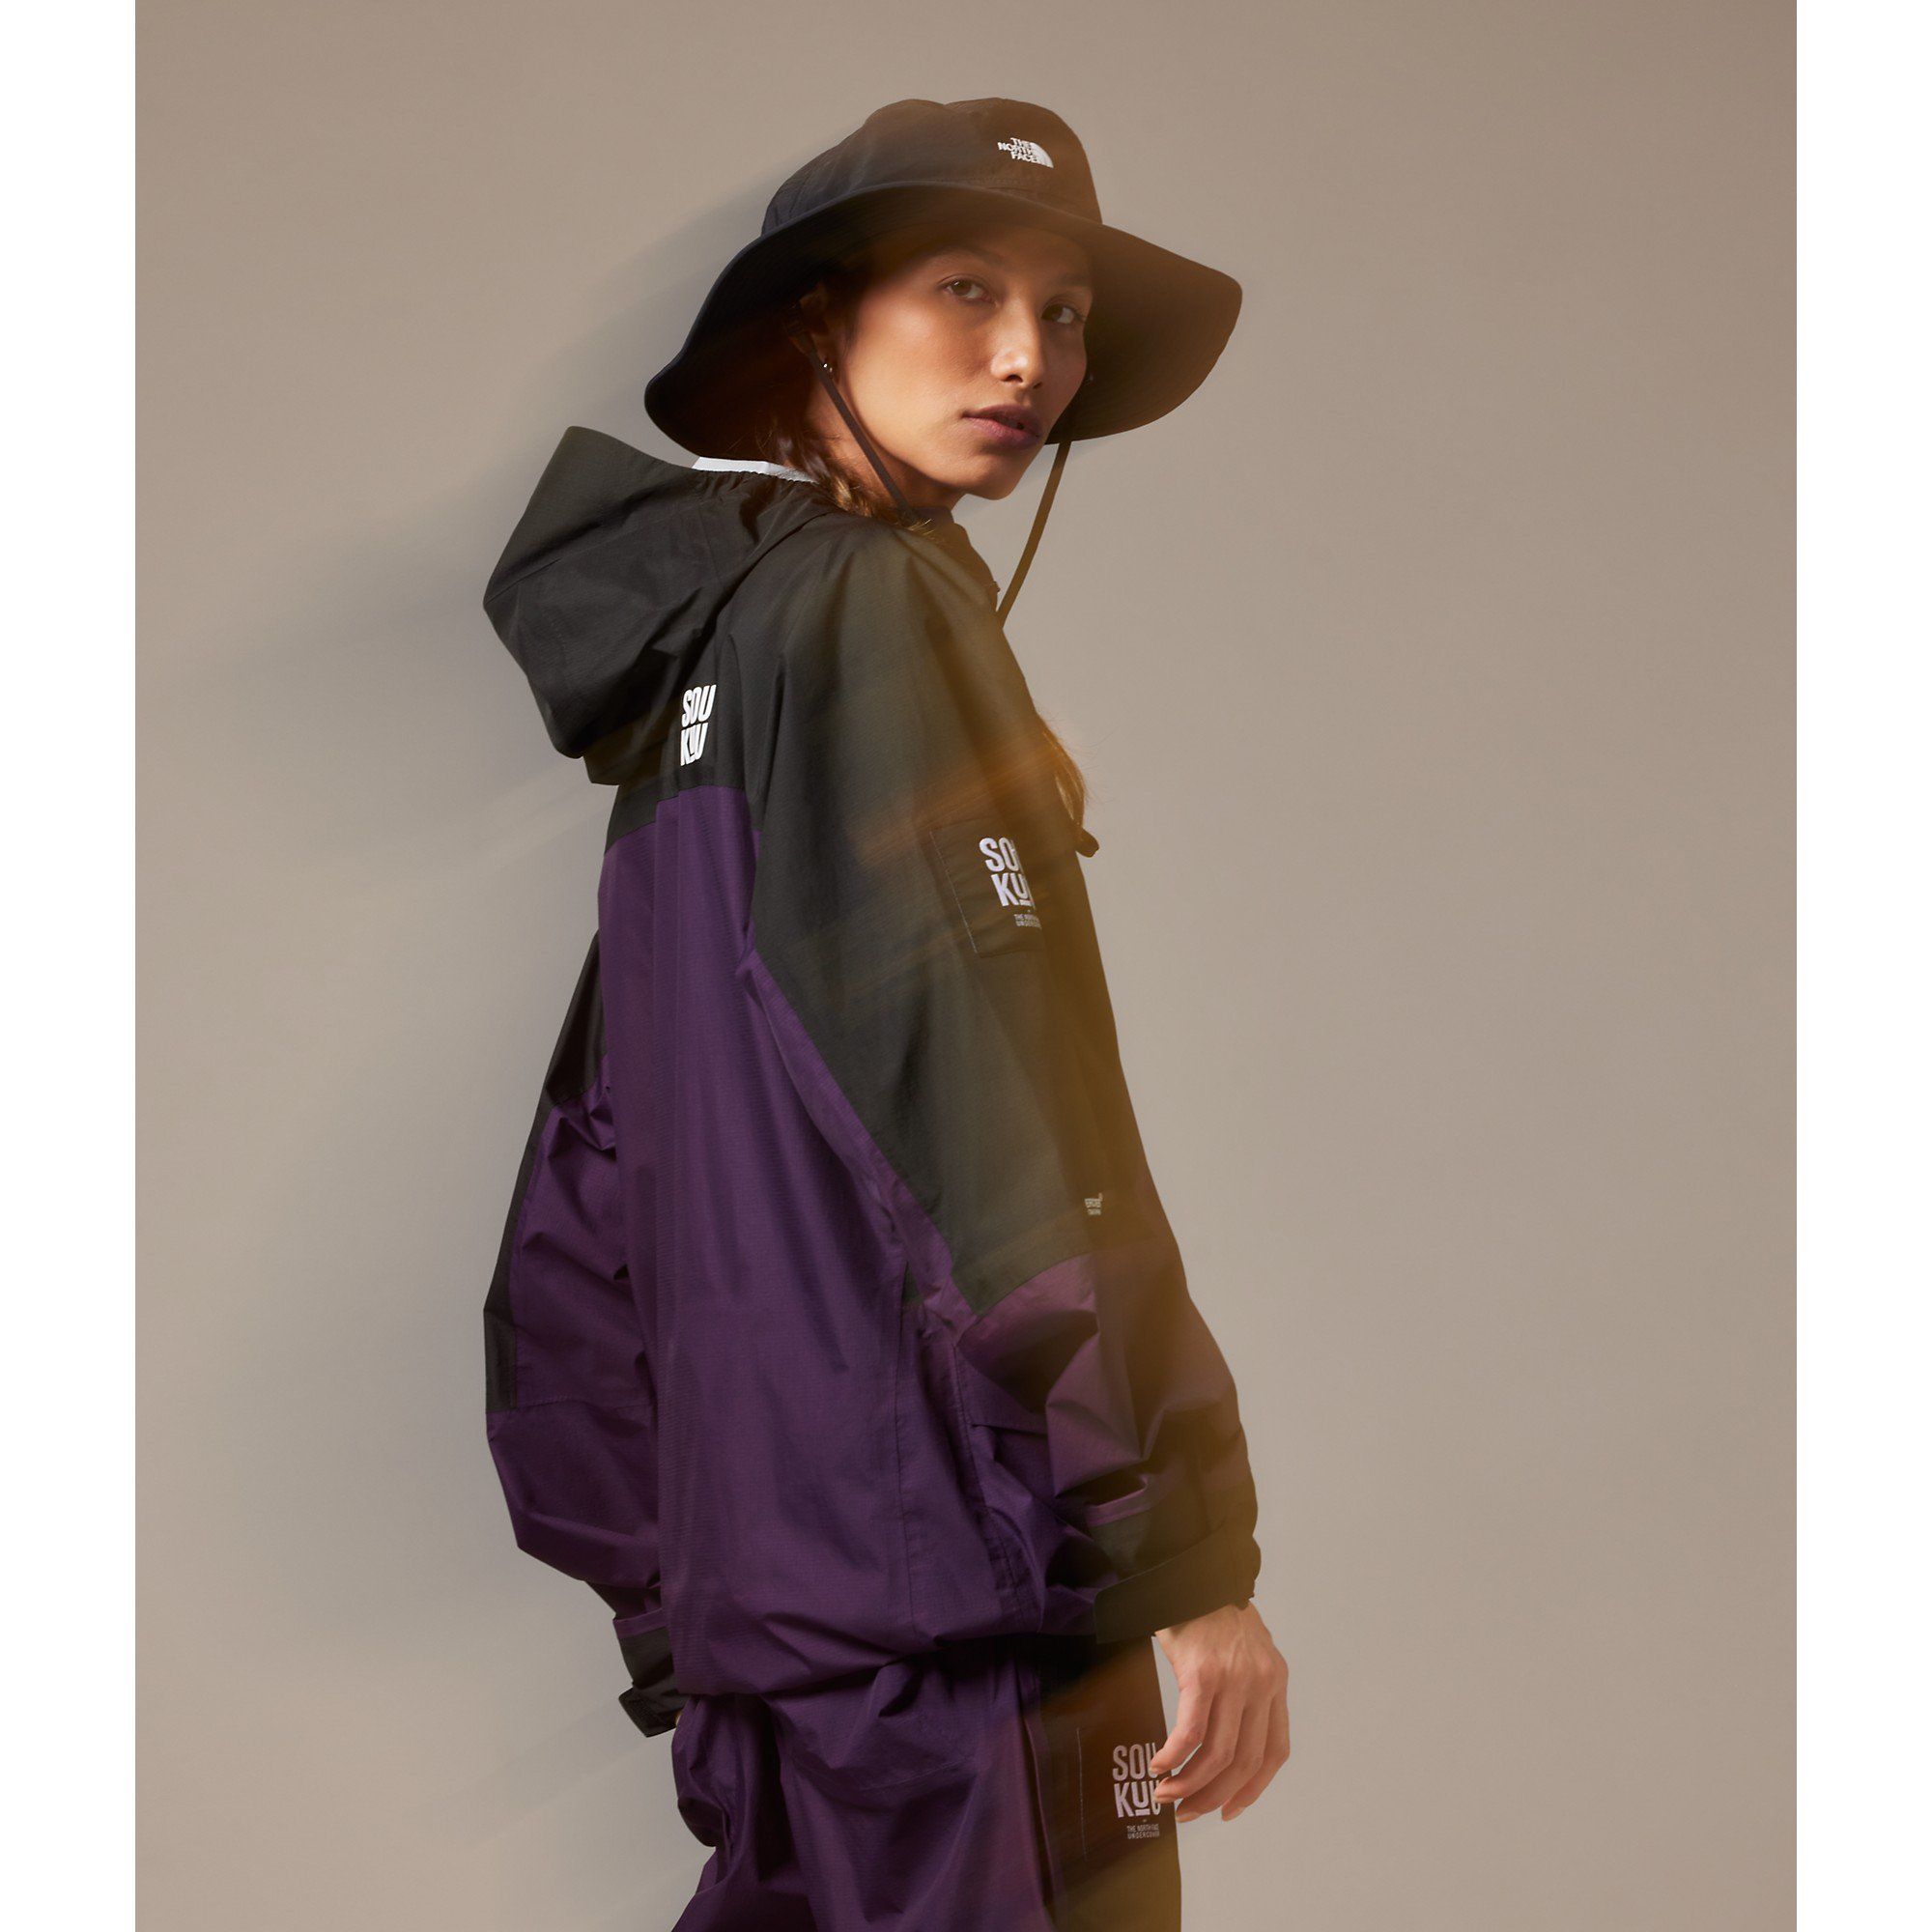  TNF x UNDERCOVER SOUKUU Hike Packable Mountain Light Shell Jacket - Purple 